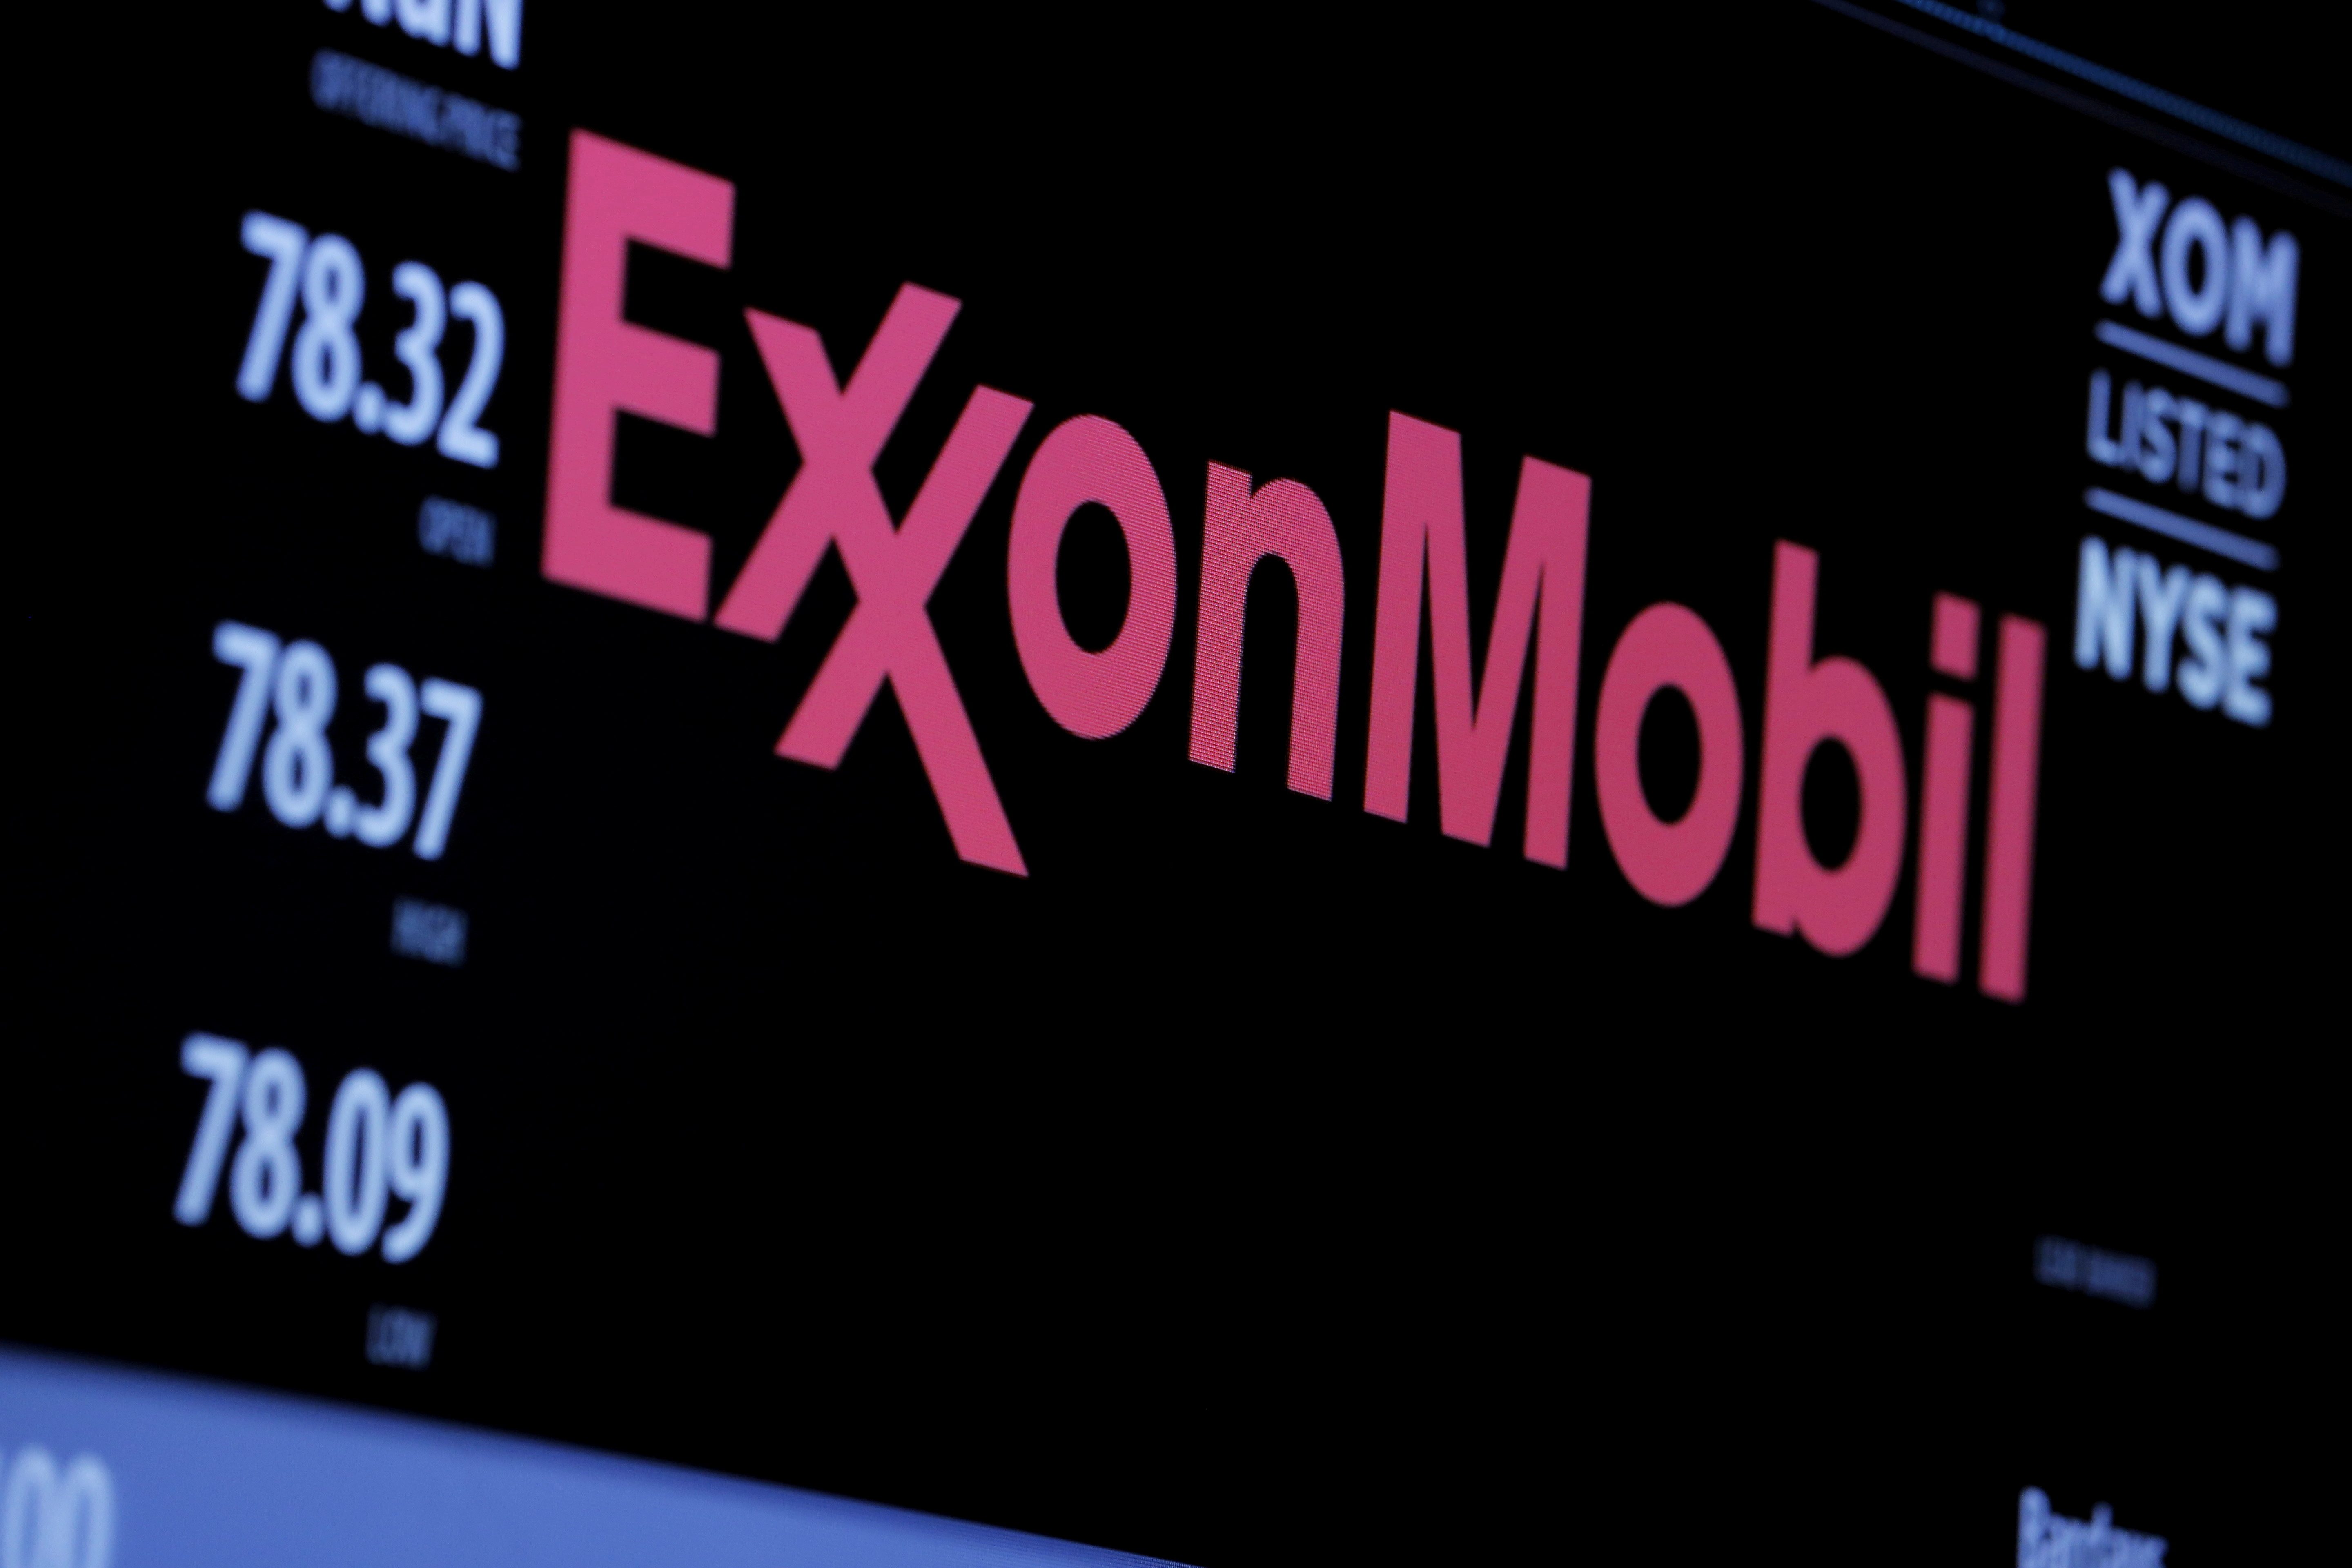 Exxon to invest $10 billion in massive Guyana offshore oil project